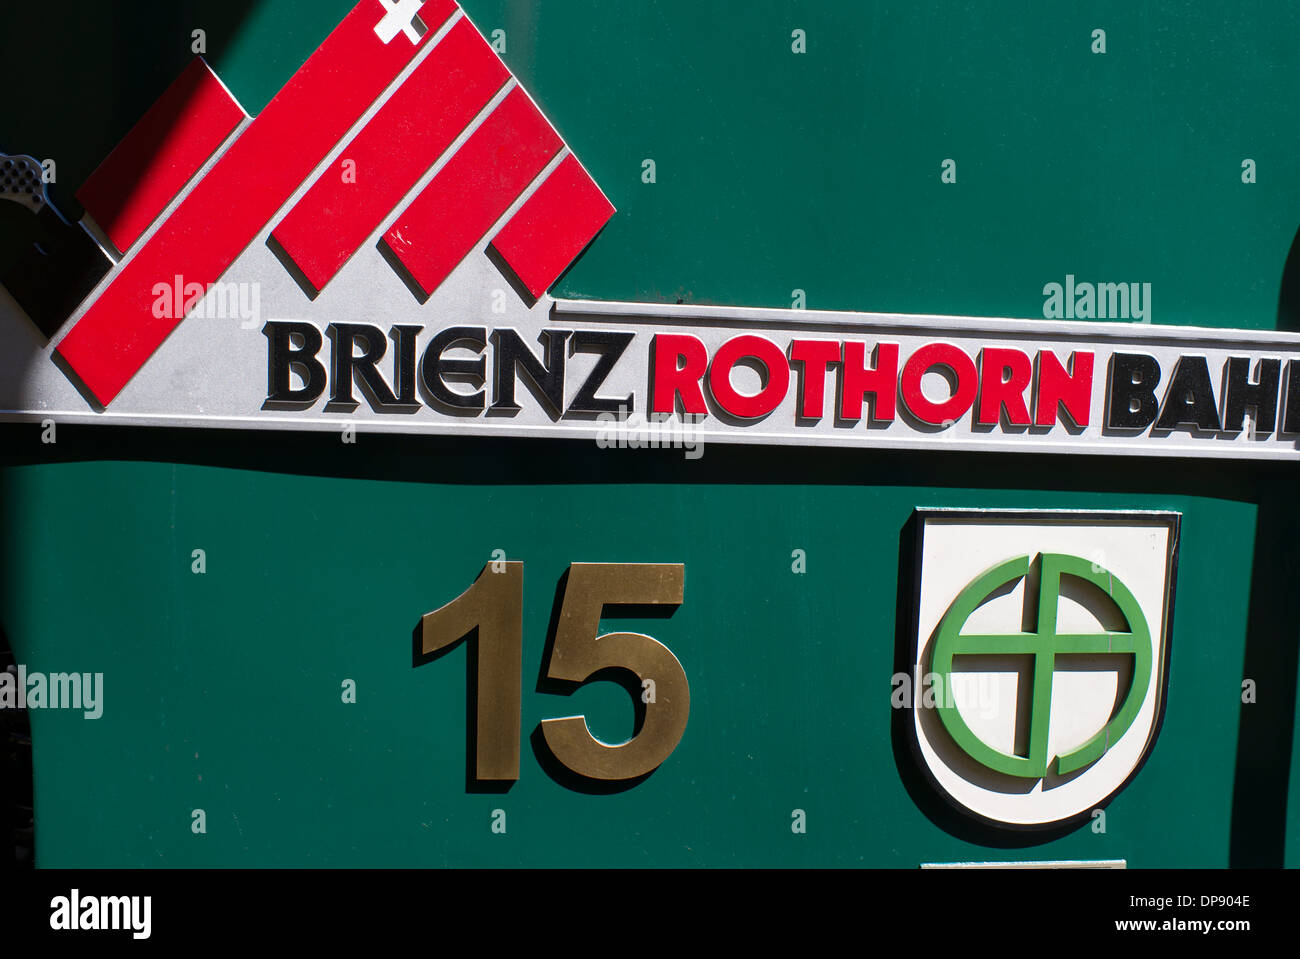 Information on side of Brienz Rothorn Bahn railway engine Stock Photo